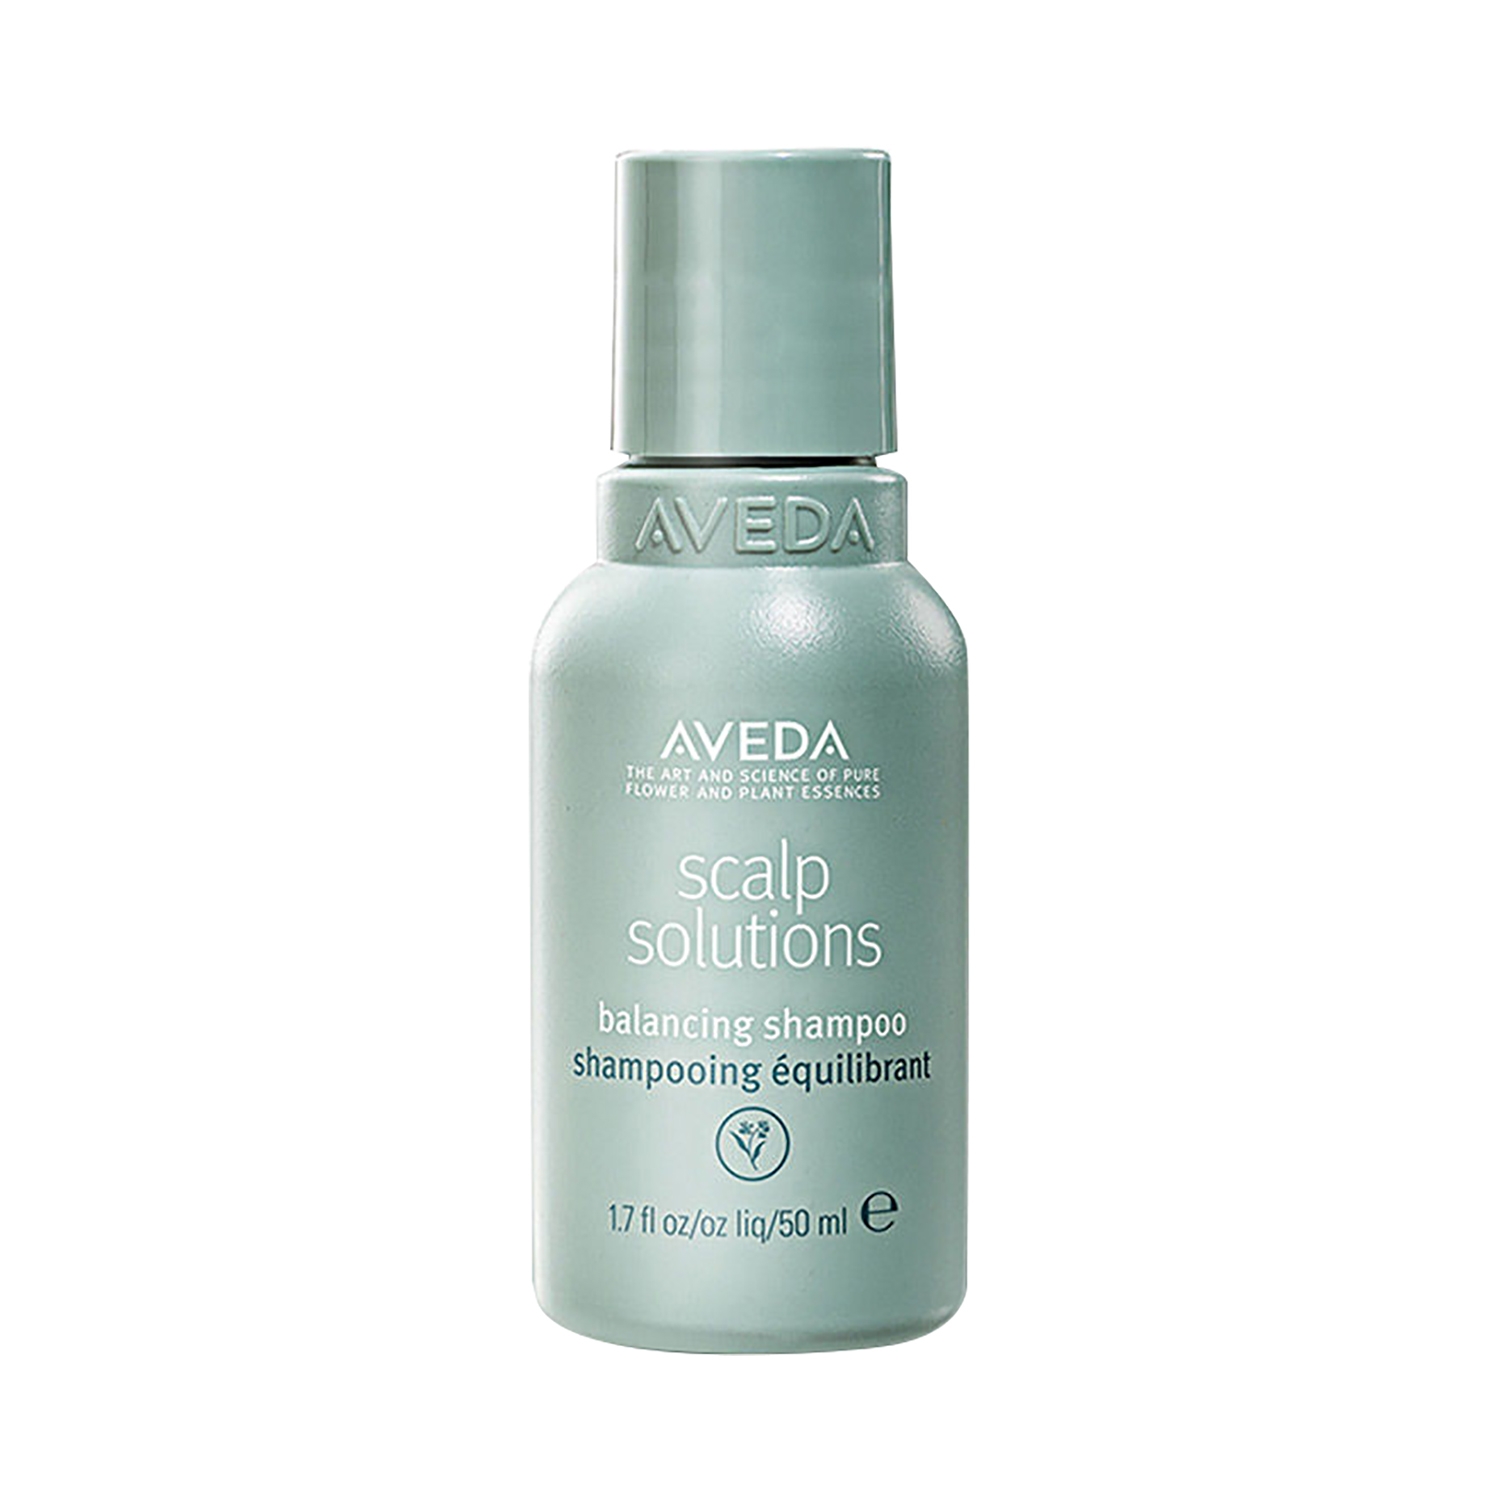 Aveda | Aveda Scalp Solutions Balancing Shampoo (50ml)